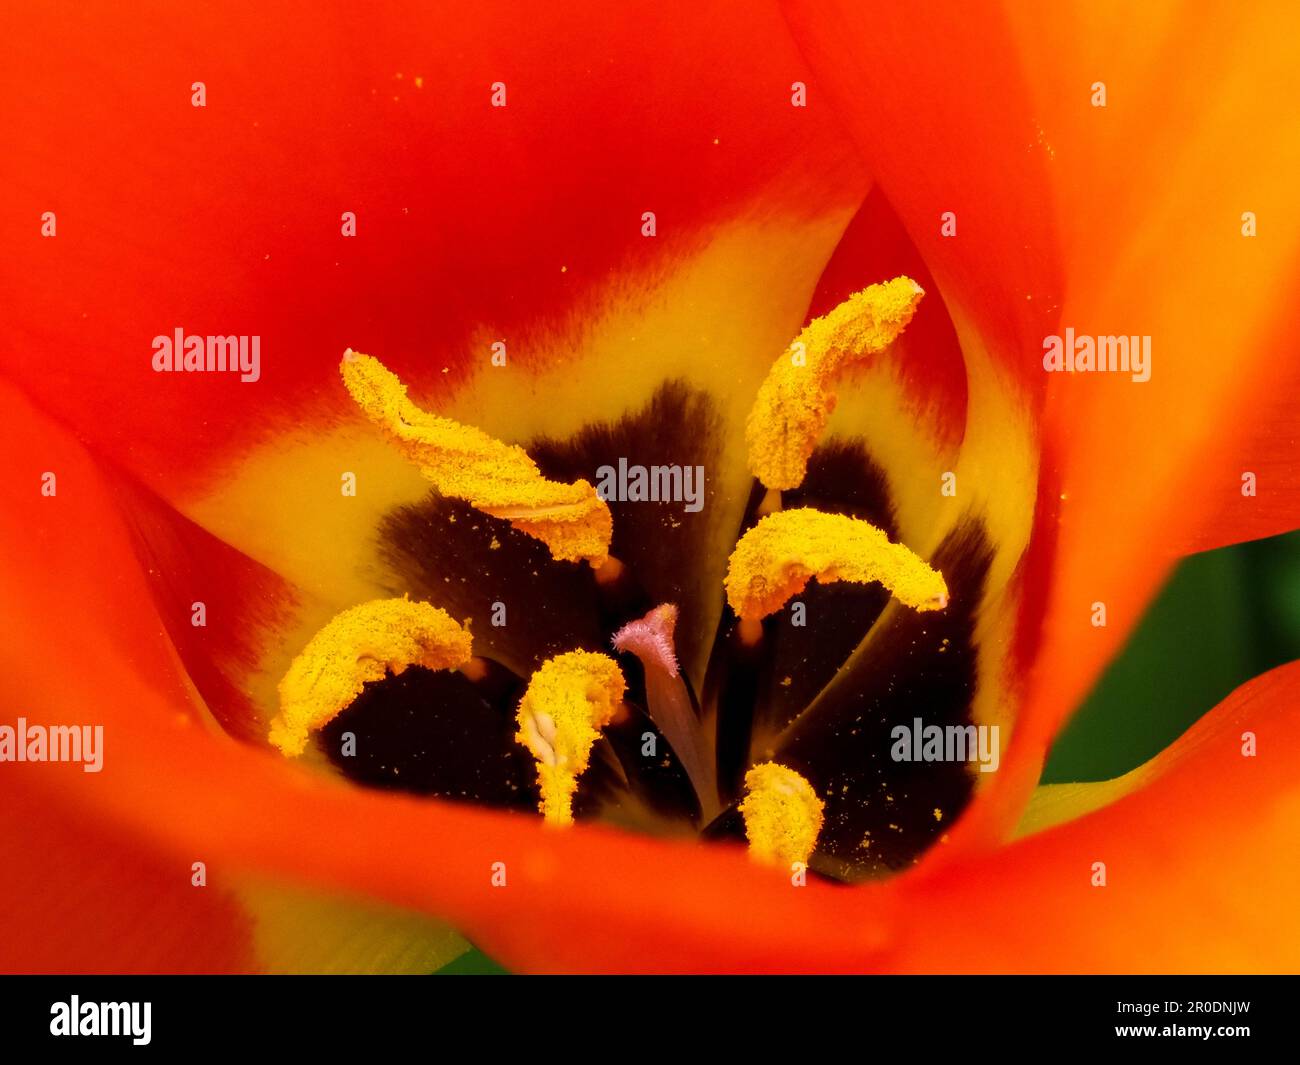 Estampille tulipe rouge et orange Banque D'Images